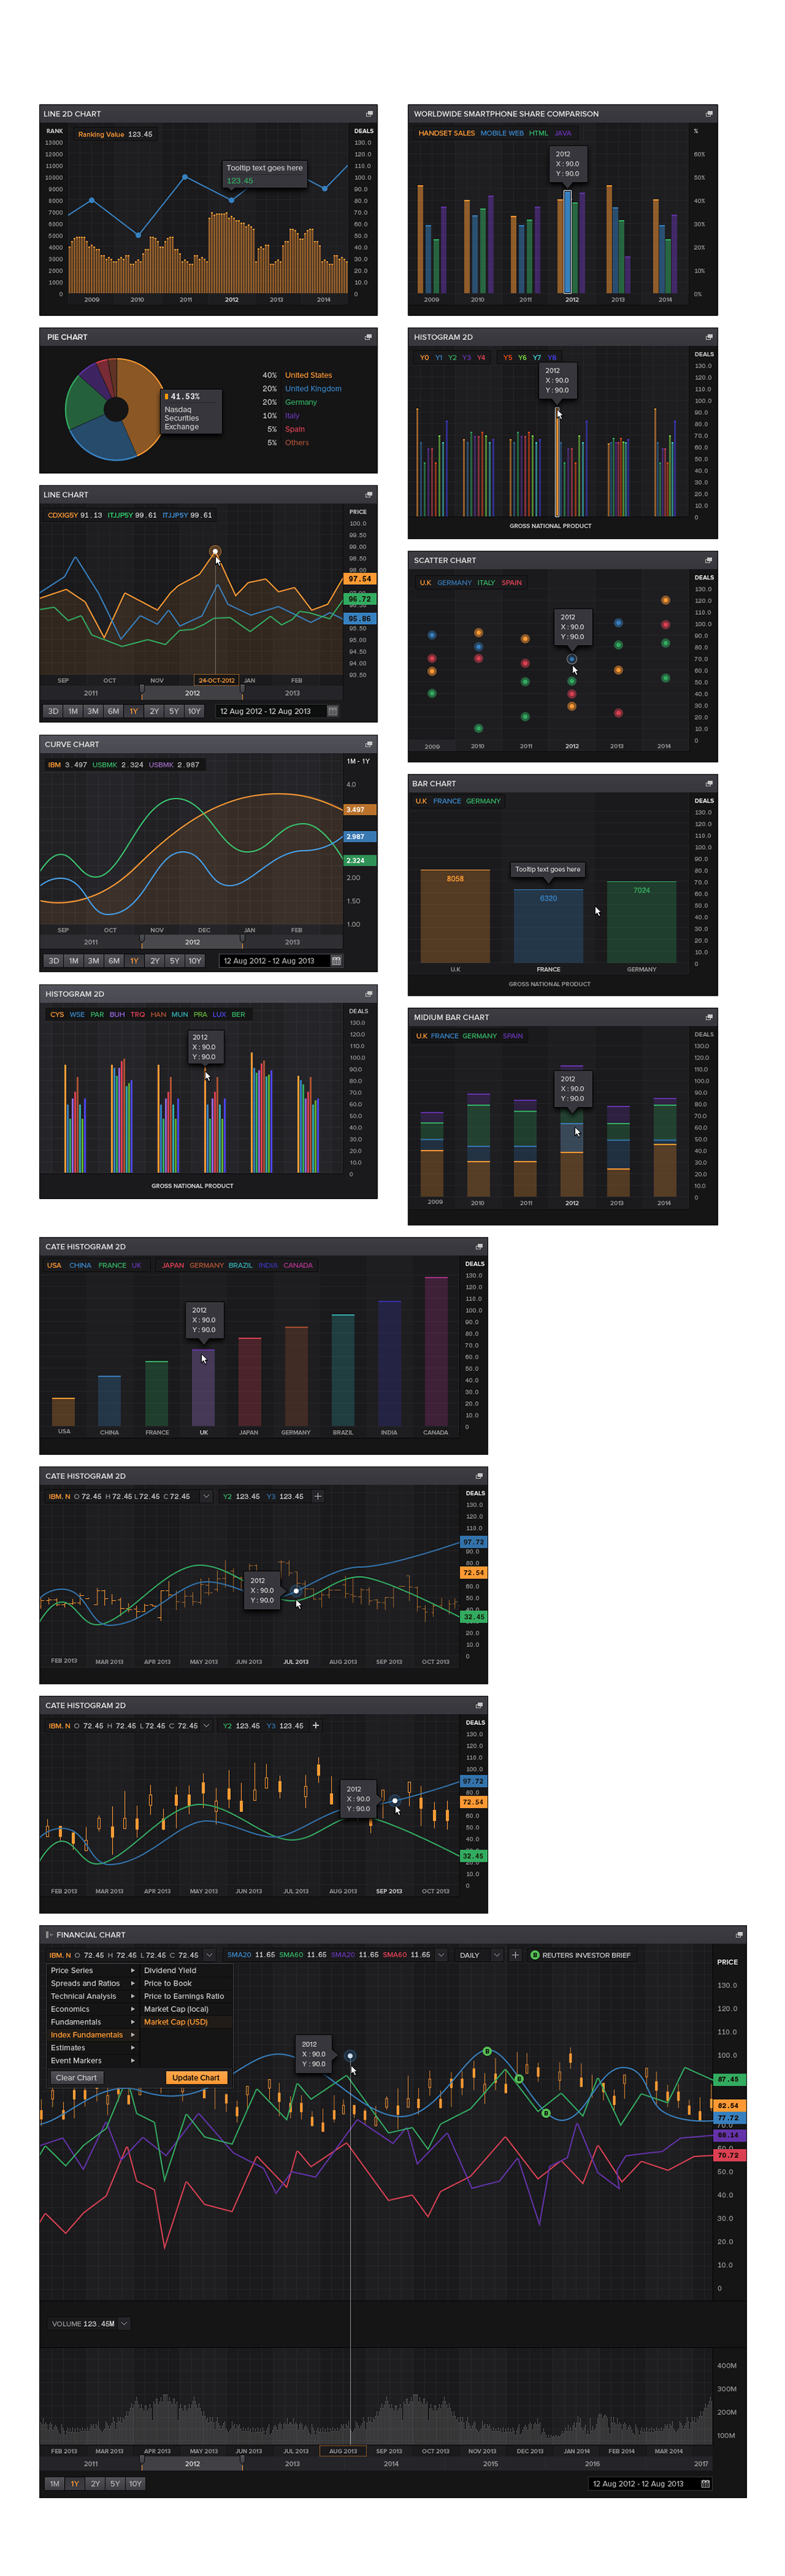 finance Thomson Reuters data visualisation content Graphs